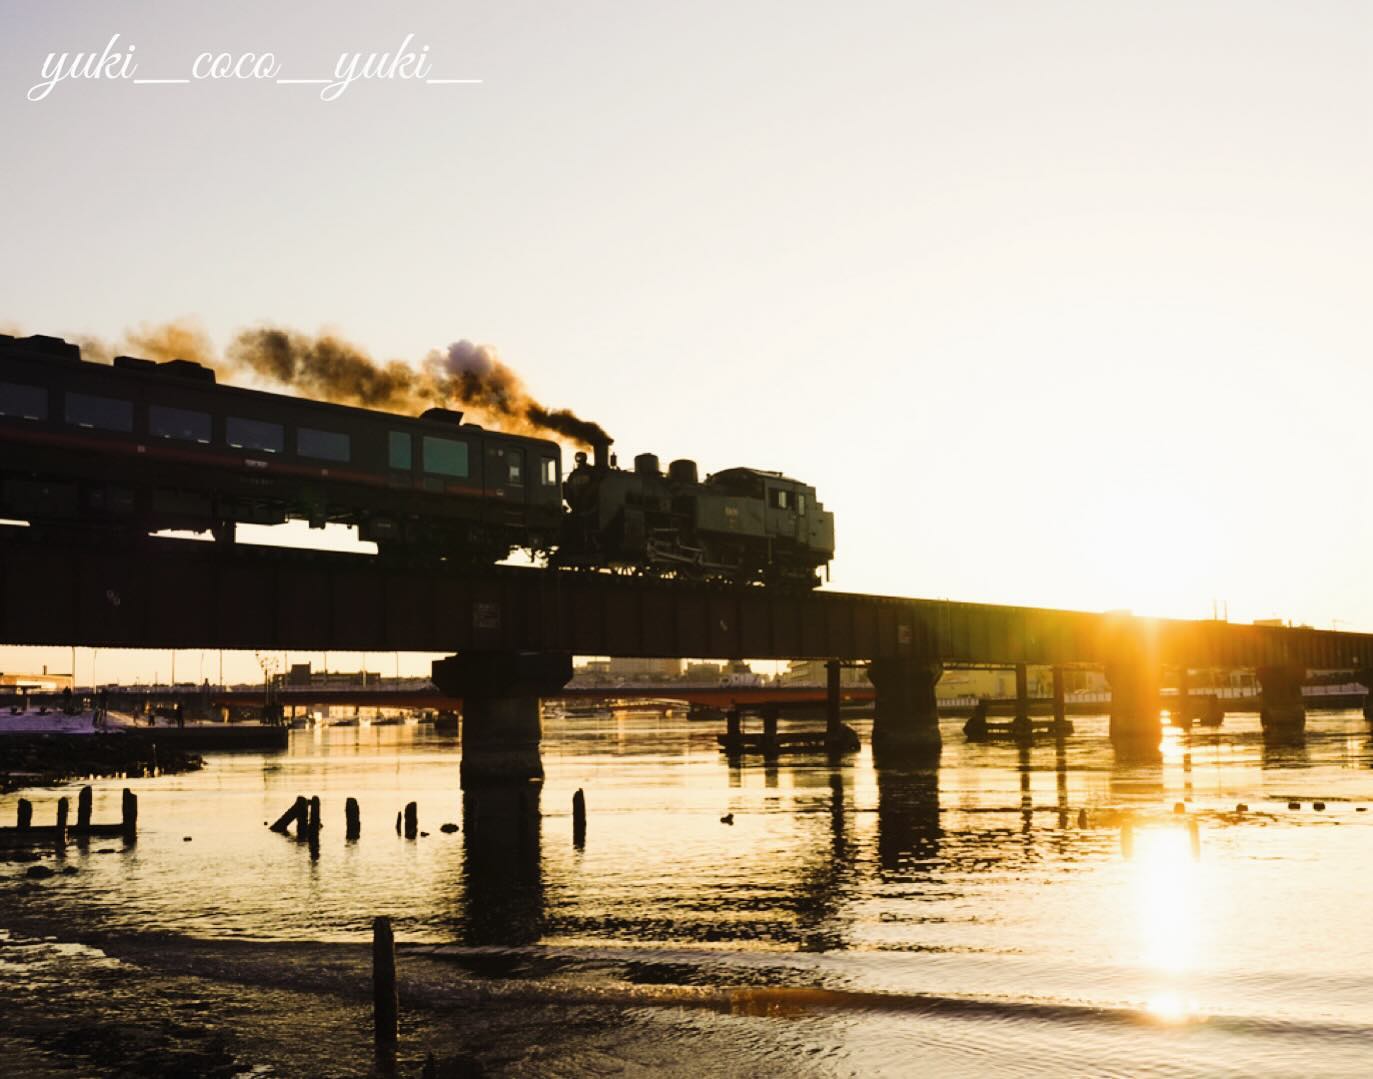 Steam locomotive heading towards the sunset(Kushiro)